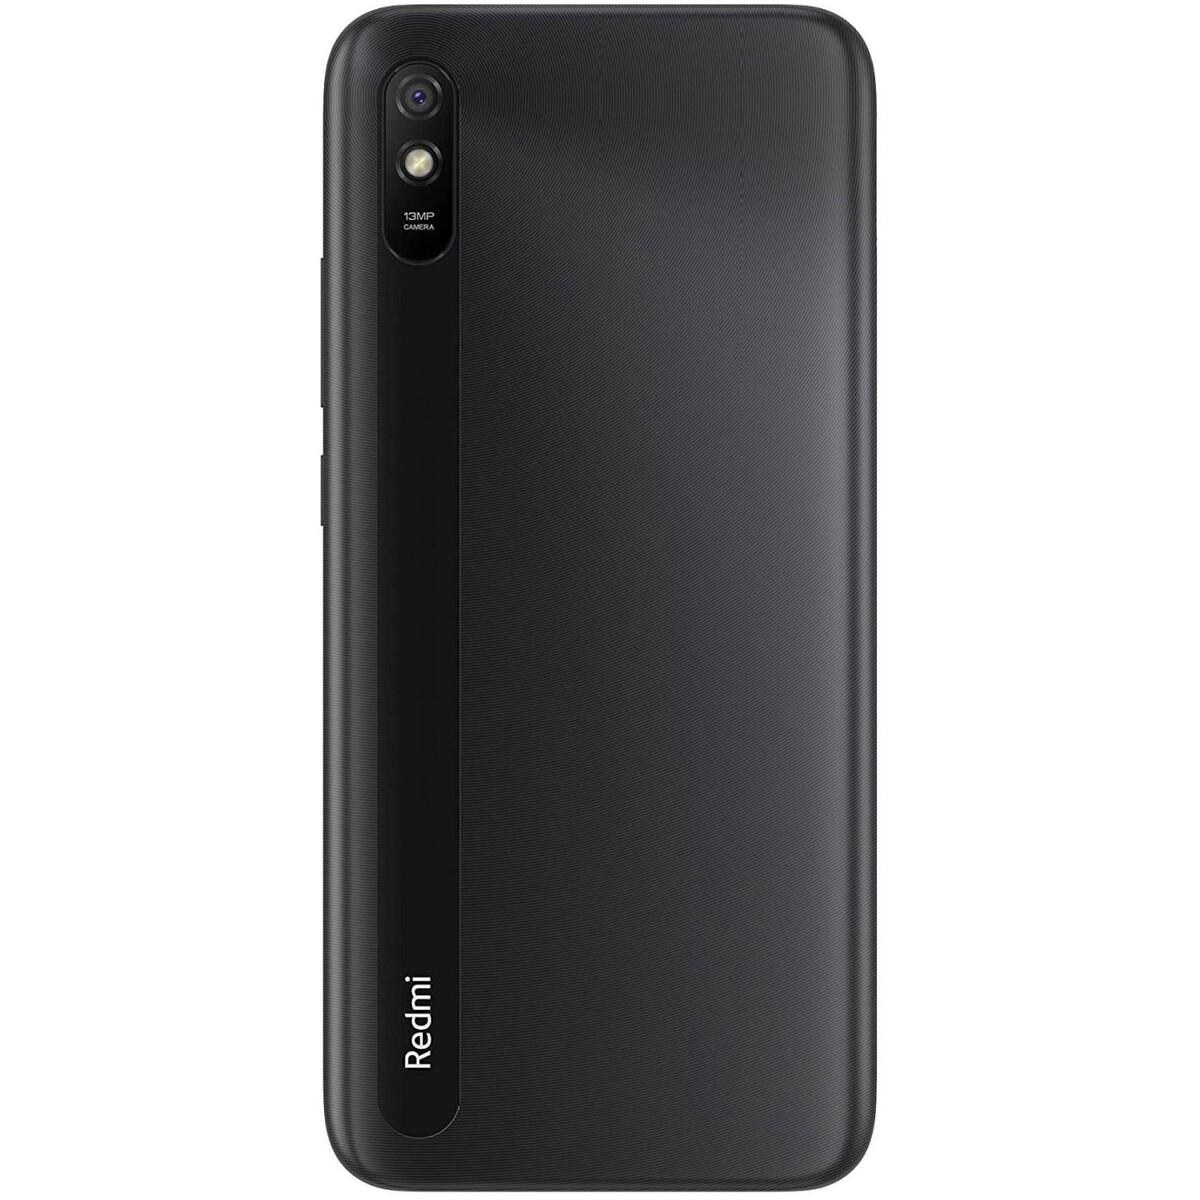 Xiaomi Redmi 9A Sport 3GB/32GB Carbon Black